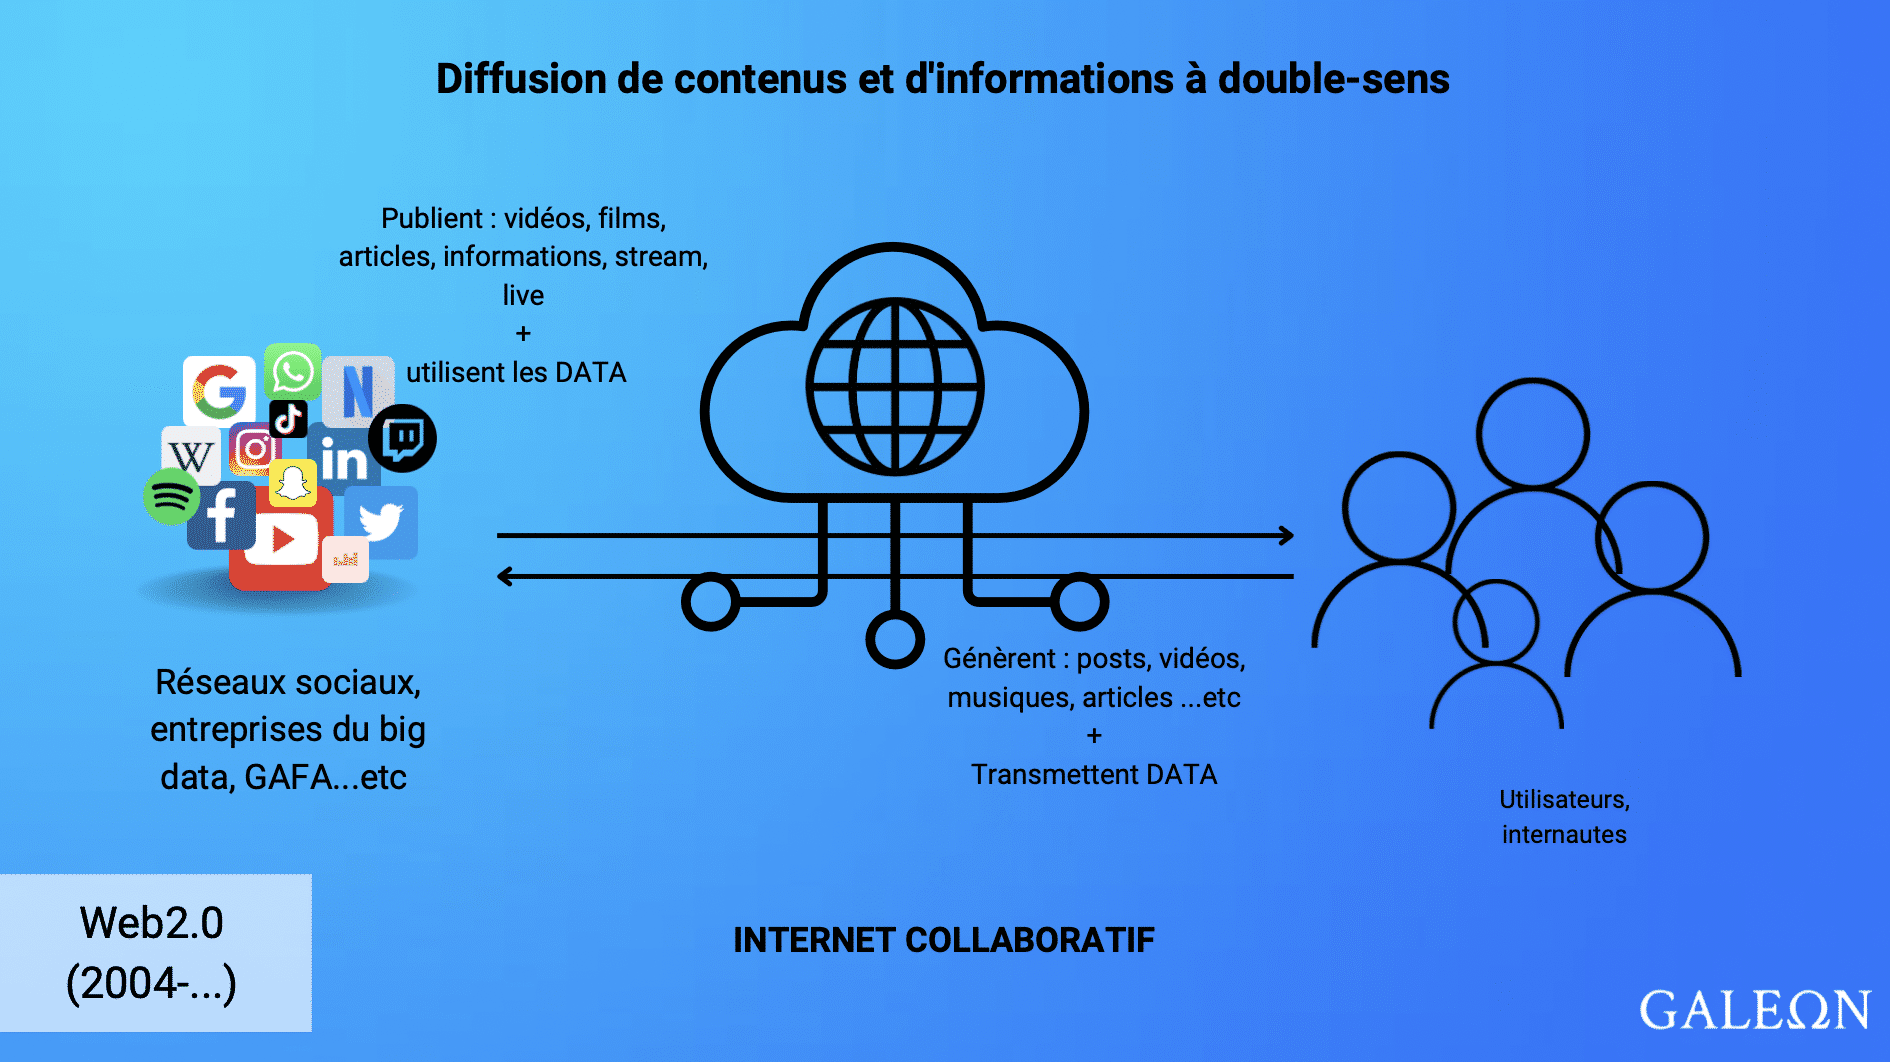 Web3 collaborativ internet